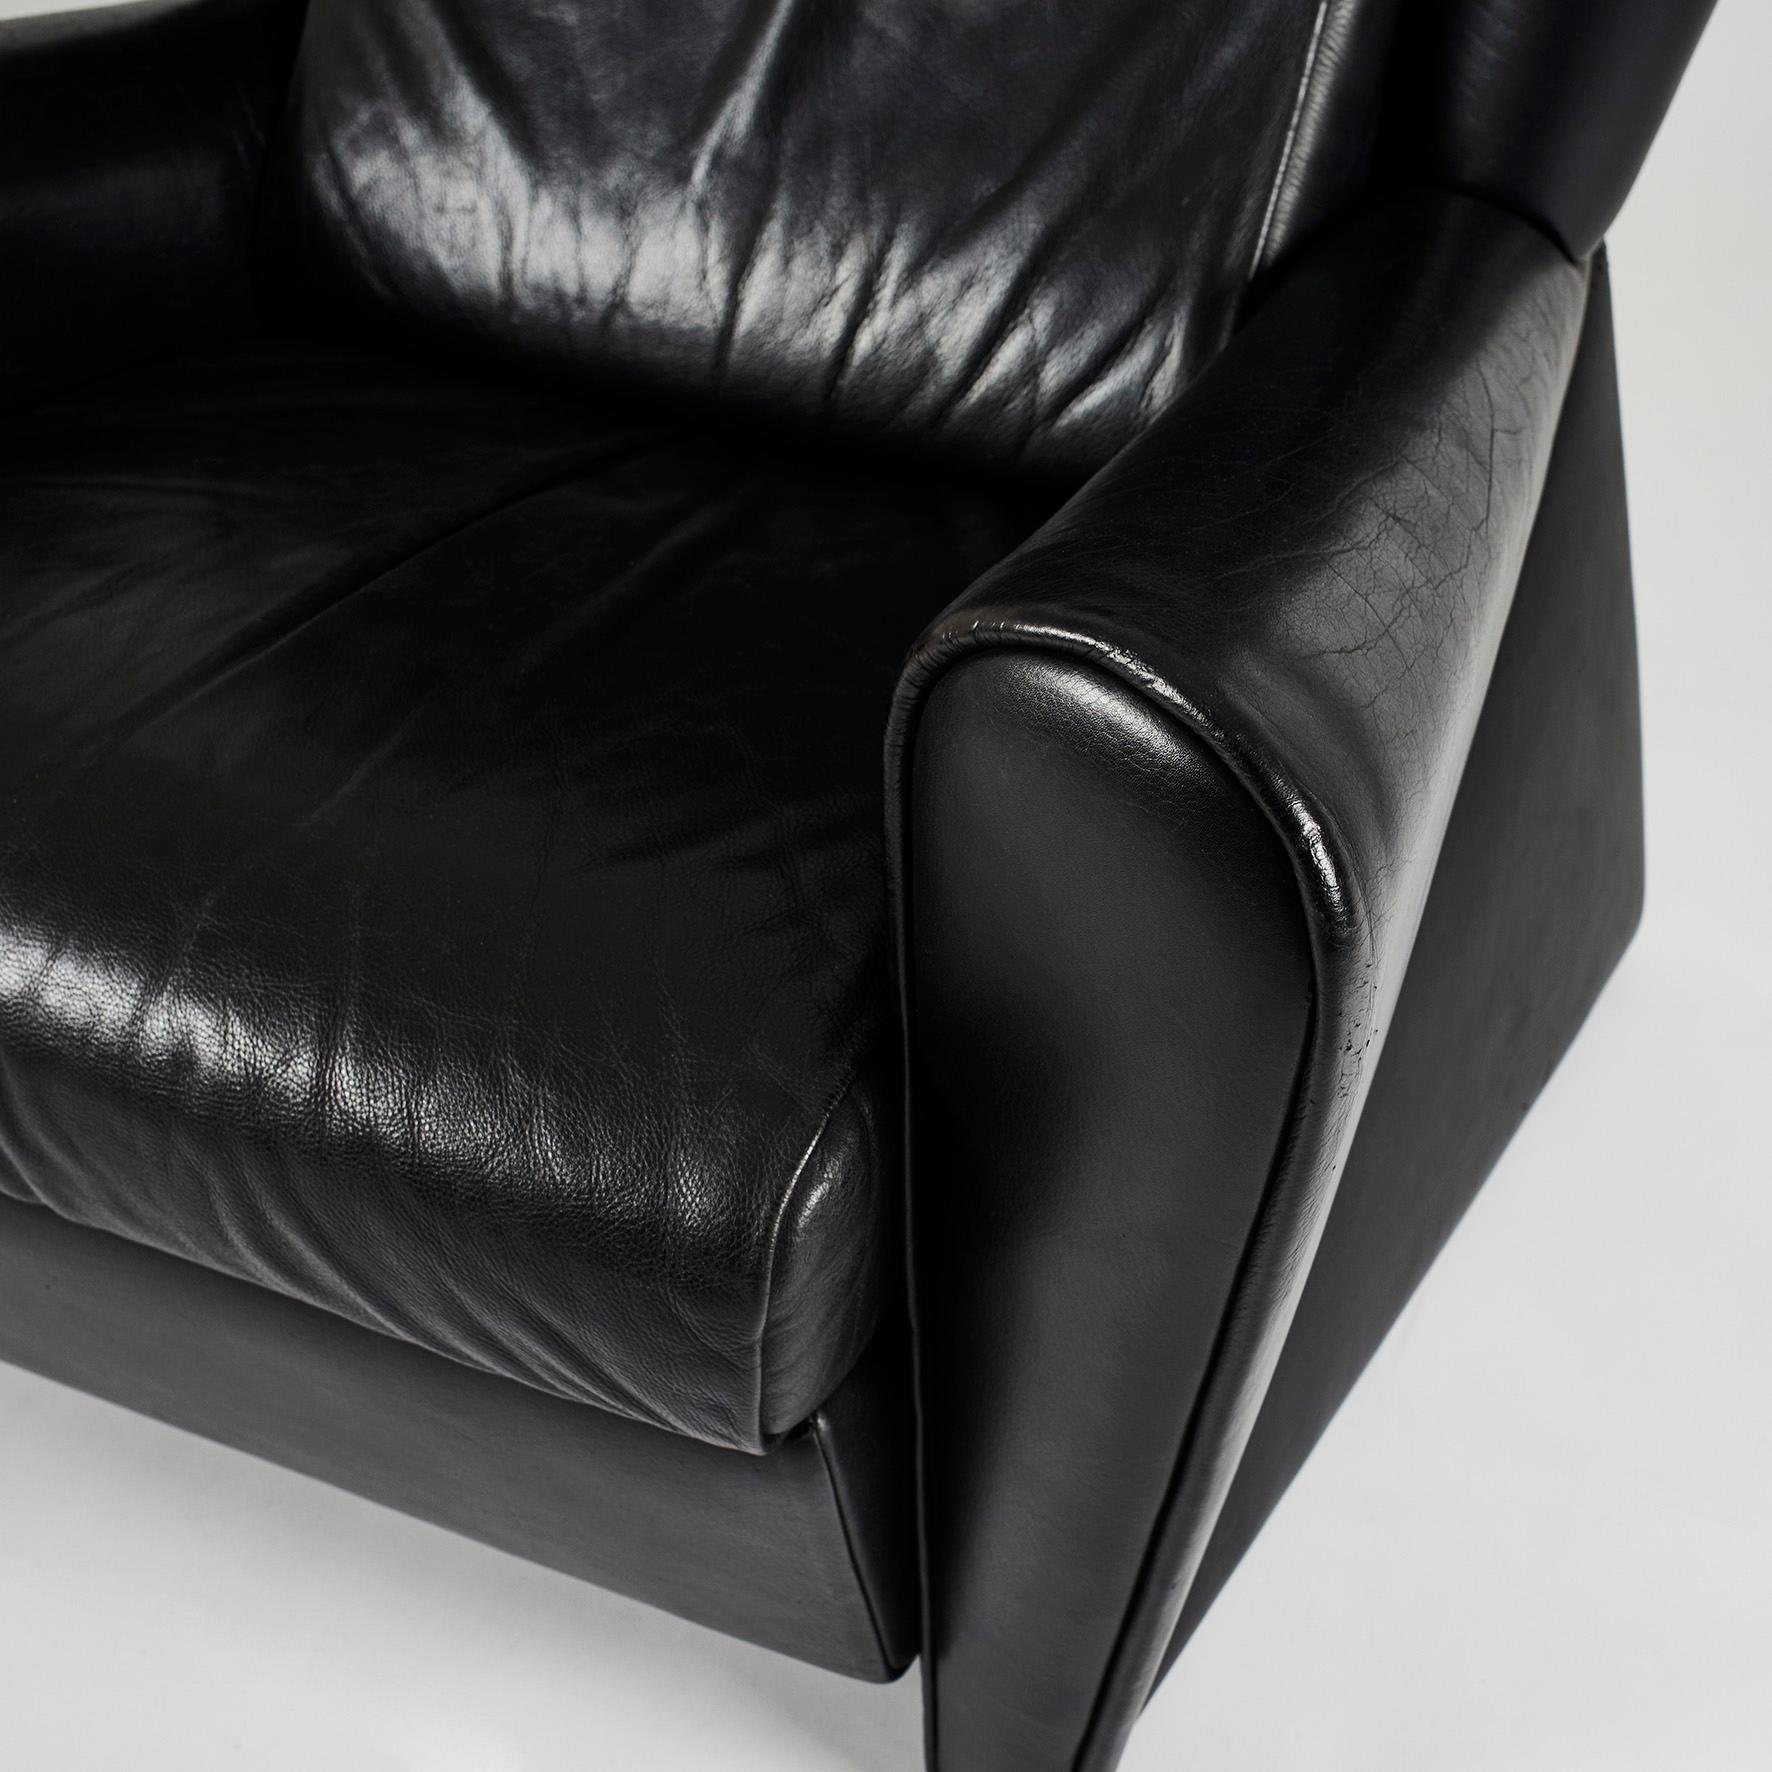 Leather Alessandro Mendini, San Leonardo black leather armchair for Matteo Grassi, 1986